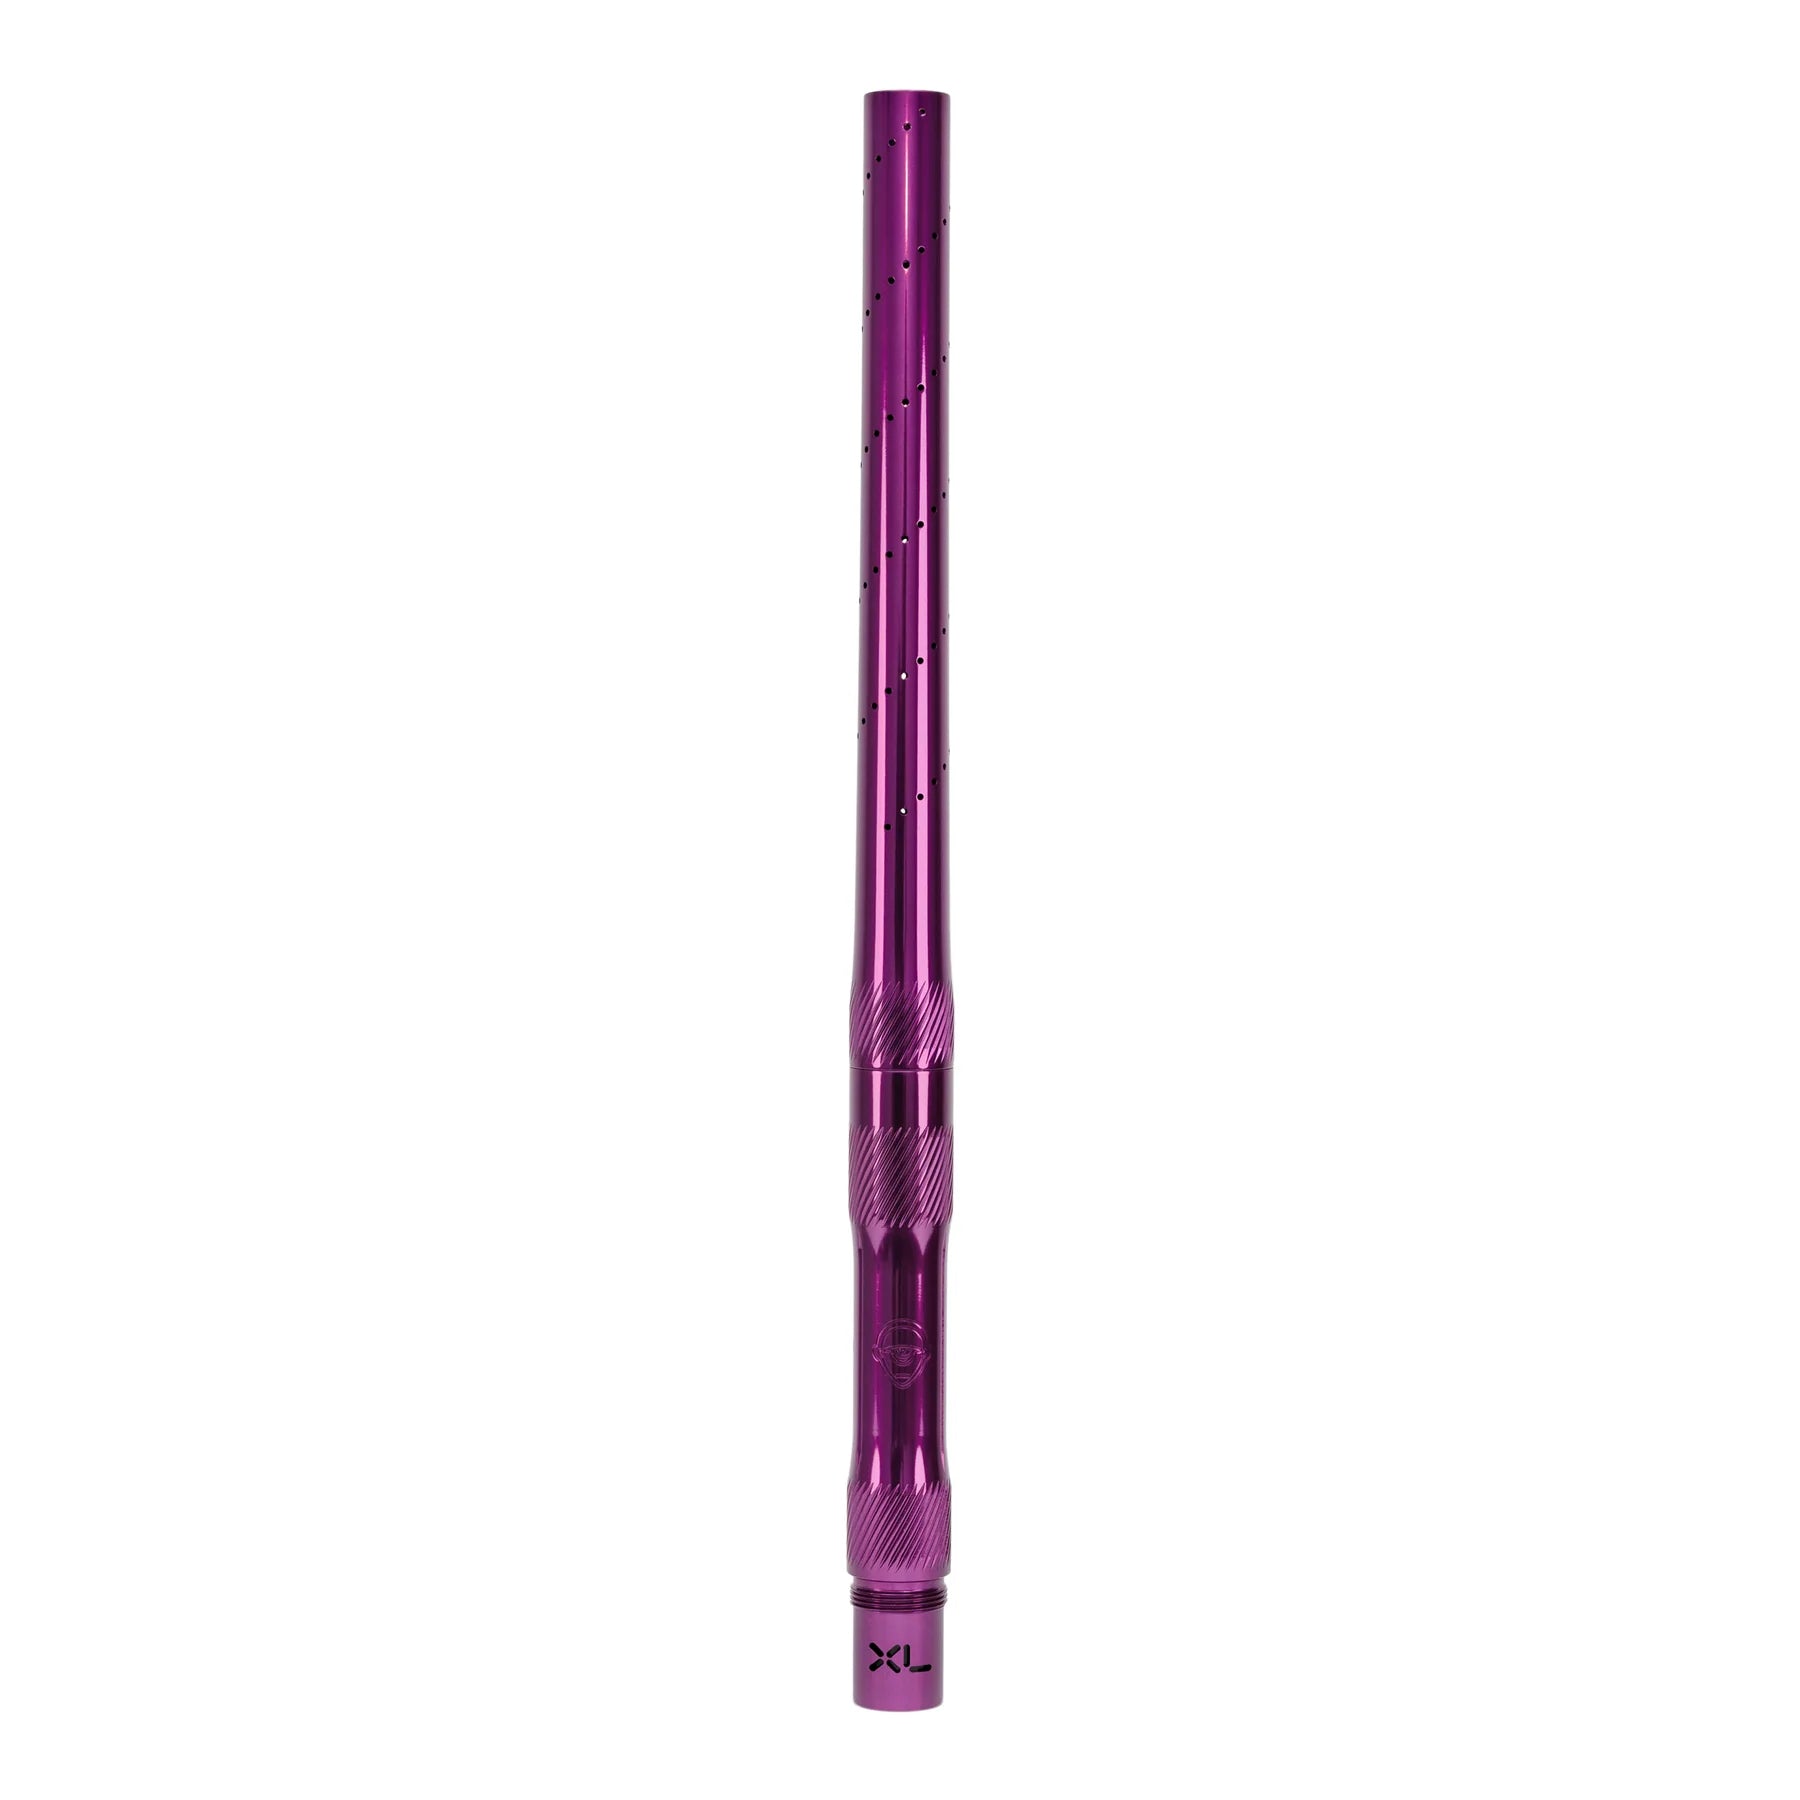 FREAK XL - Purple Anodized - Full Barrel Kit - Autococker Thread - Aluminum Insert